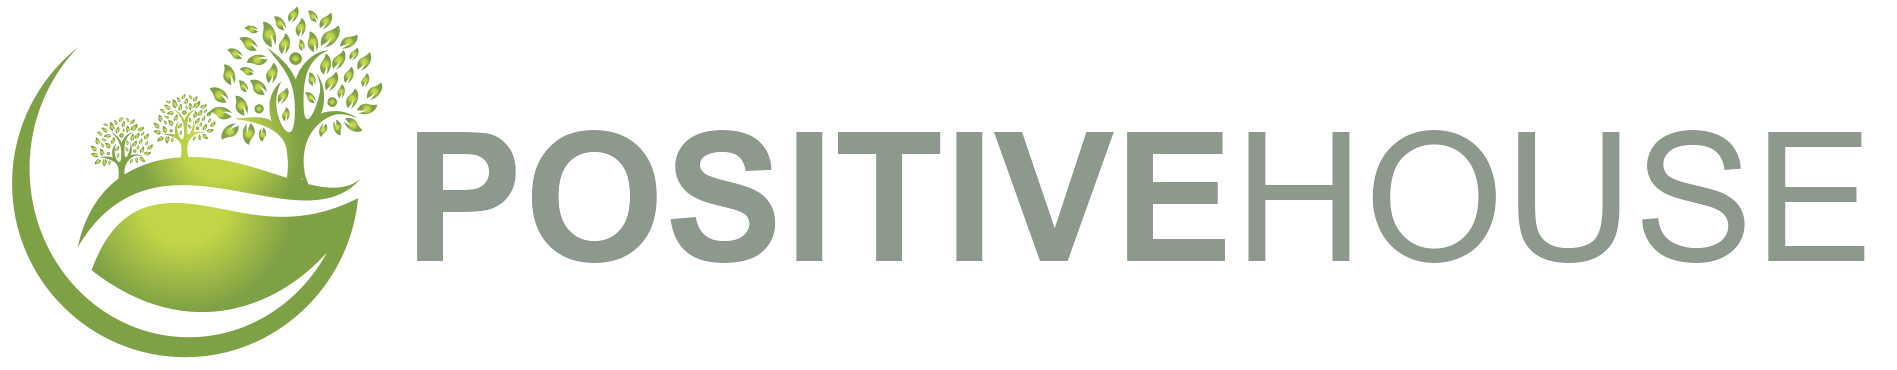 PositiveHouse logo